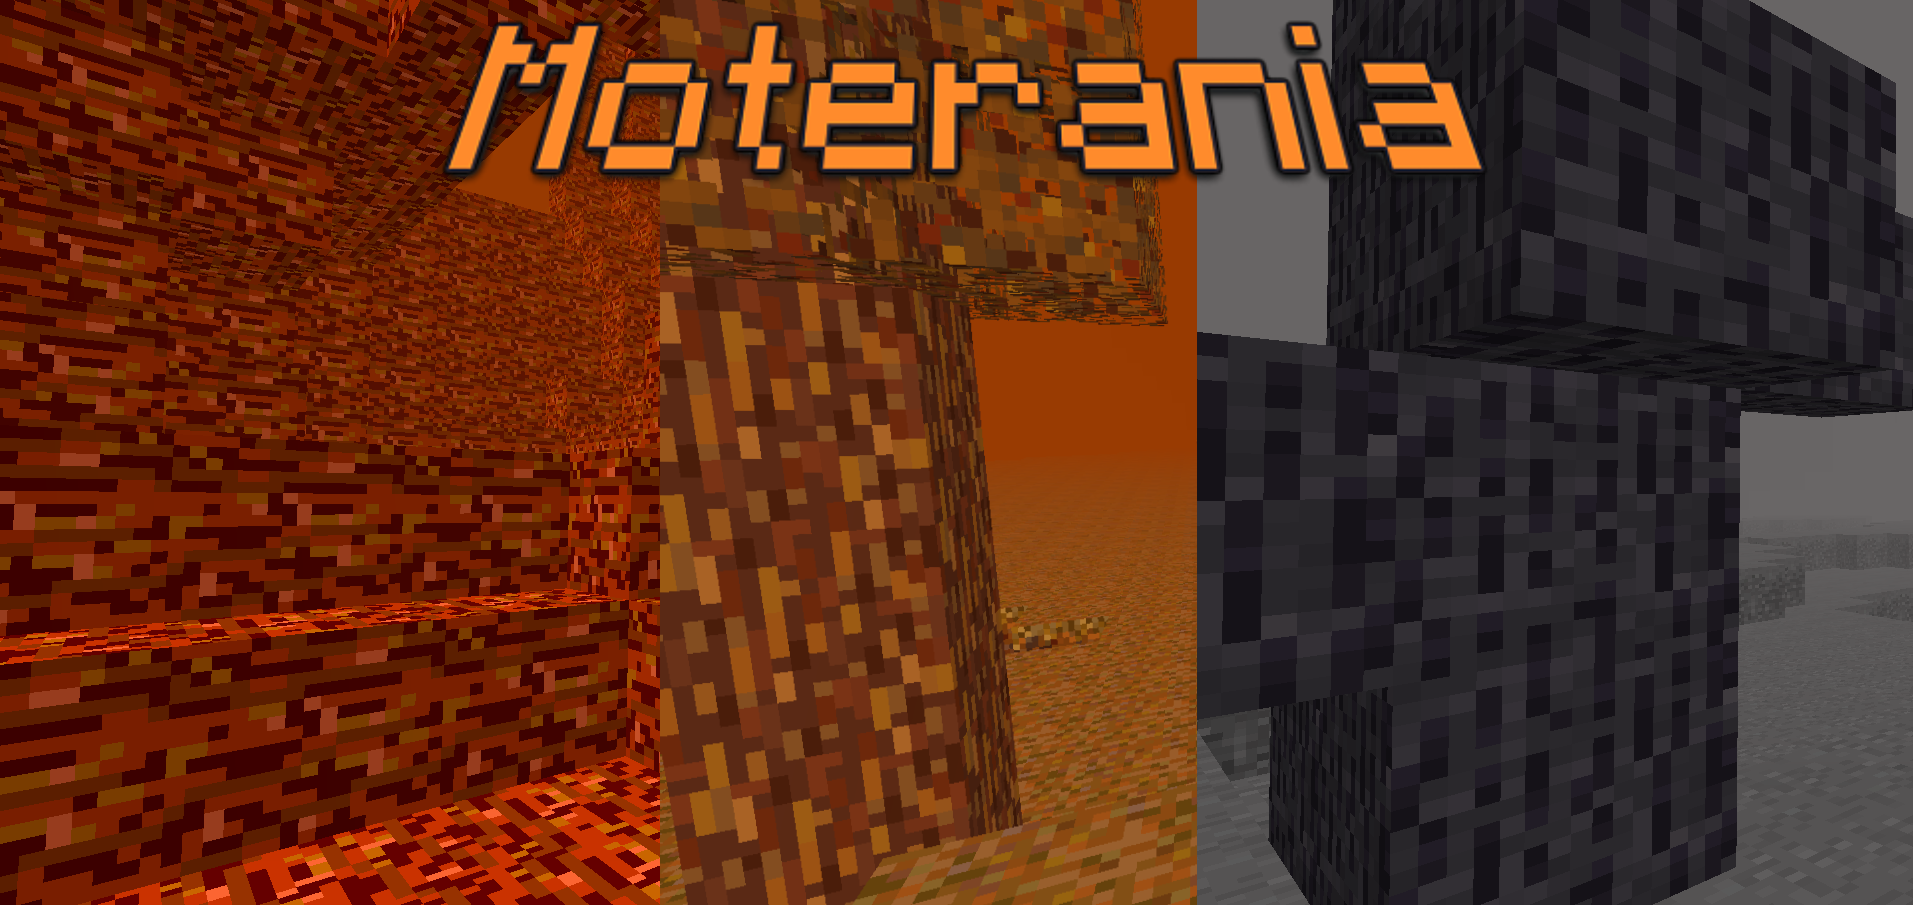 Molterania screenshot 1